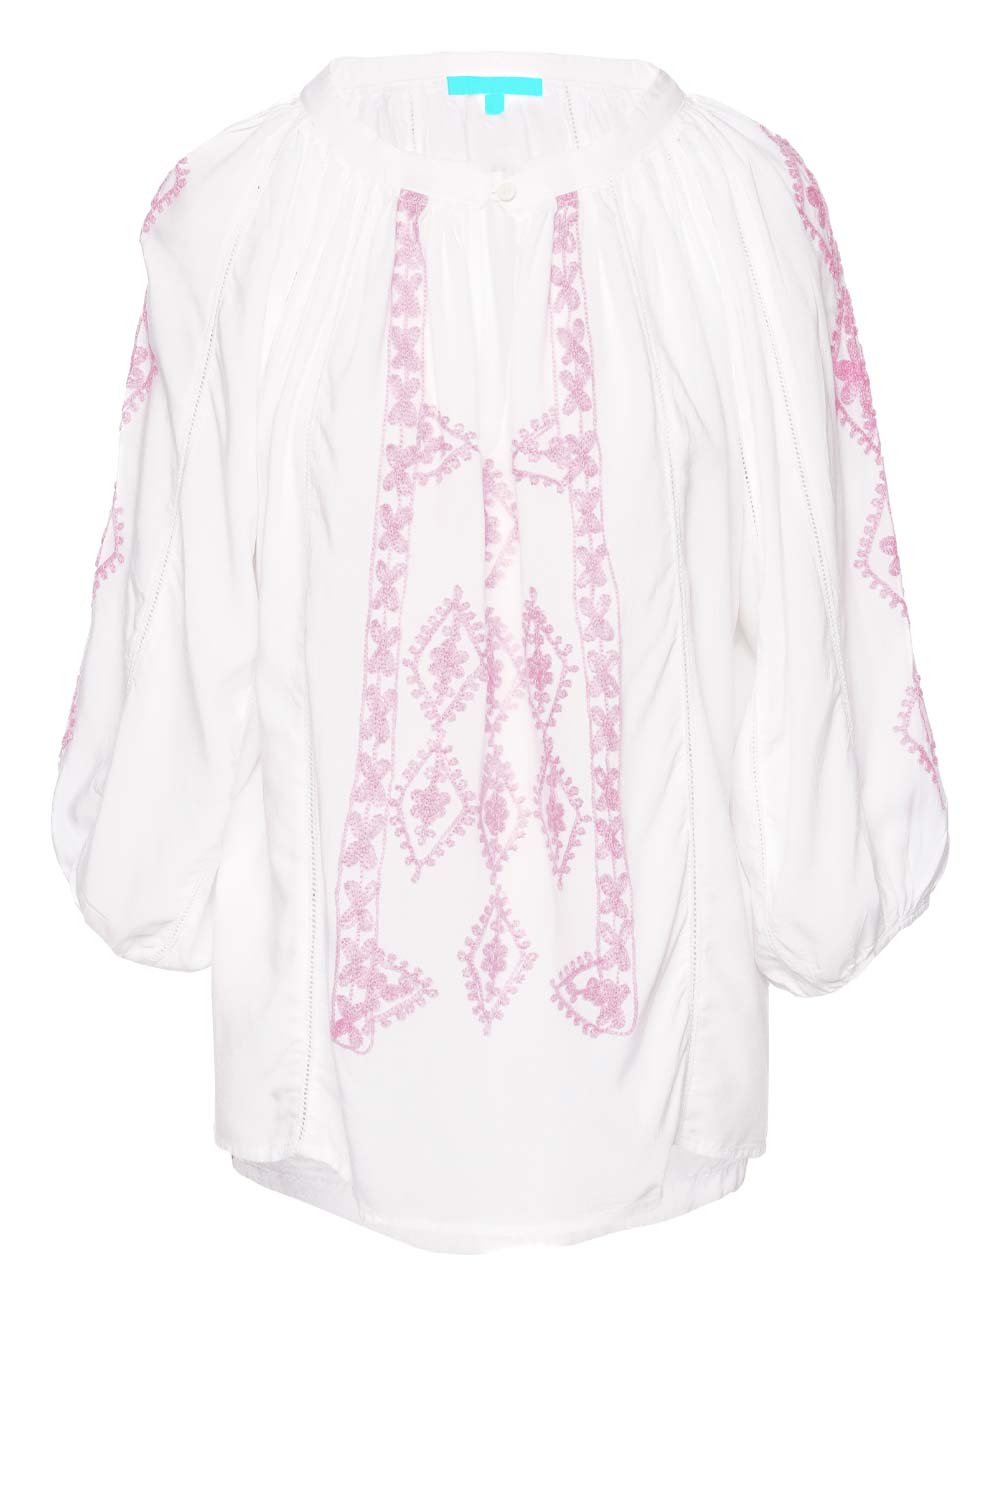 Melissa Odabash Aliya Pink Embroidered Blouse